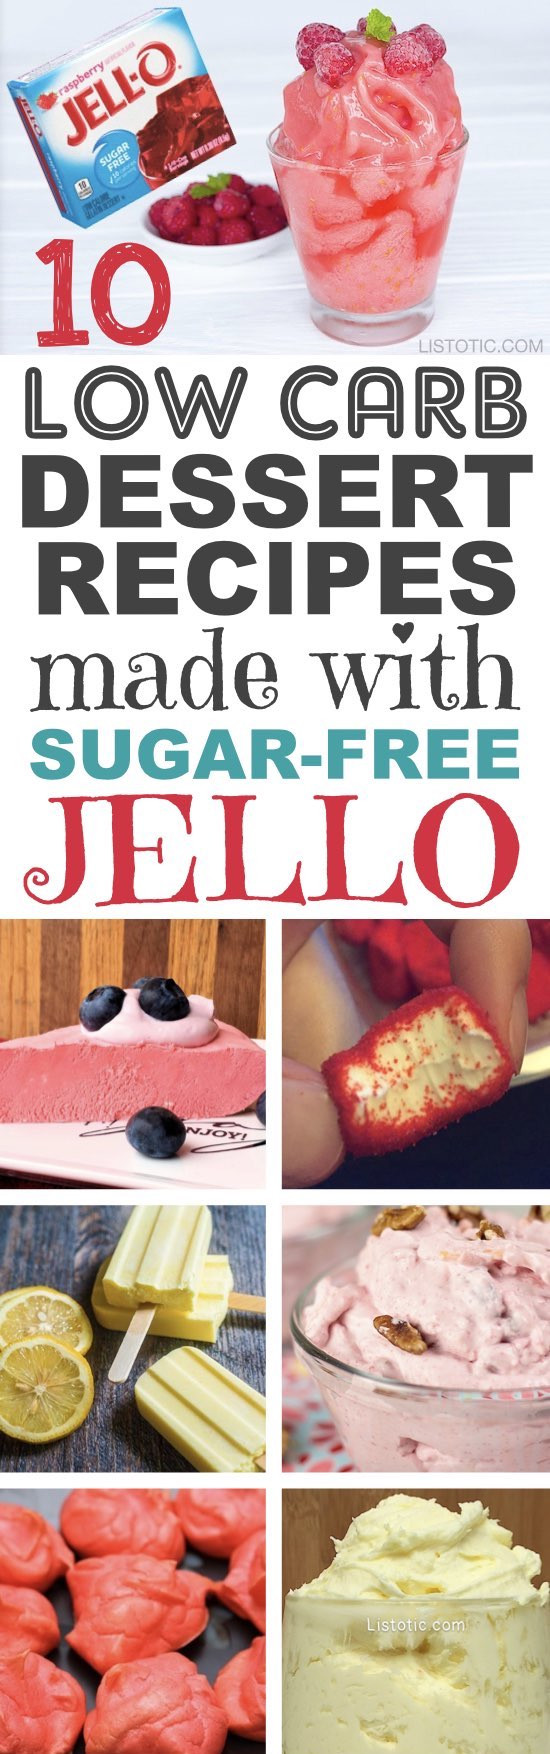 Low Carb Jello Desserts
 10 Brilliant Low Carb Jell O Dessert Recipes Using Sugar